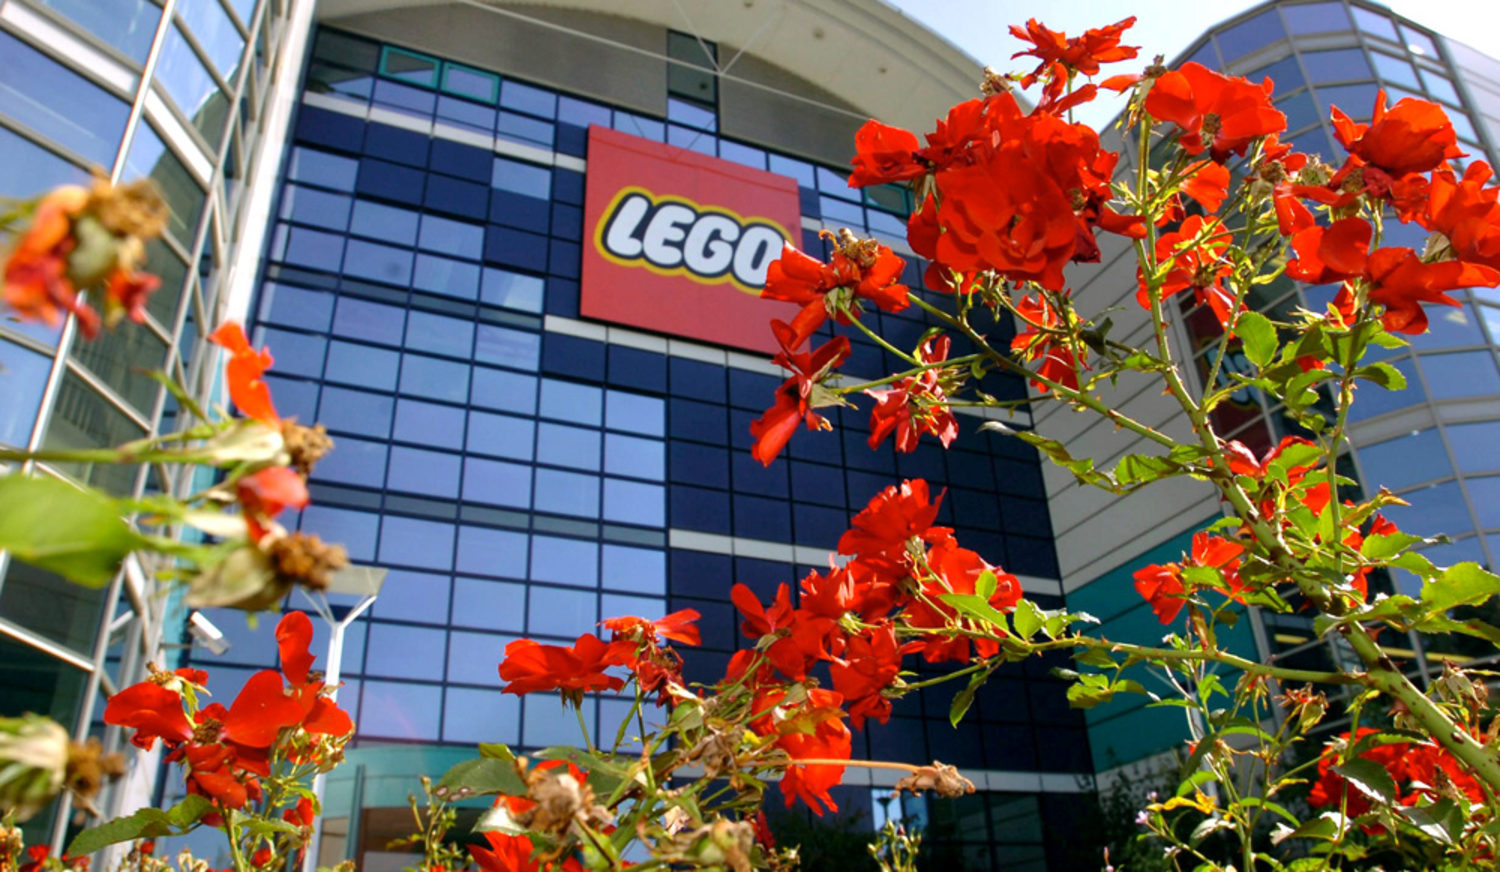 Penge gummi Sommerhus Vanærende Lego to lay off 1,200, end U.S. production